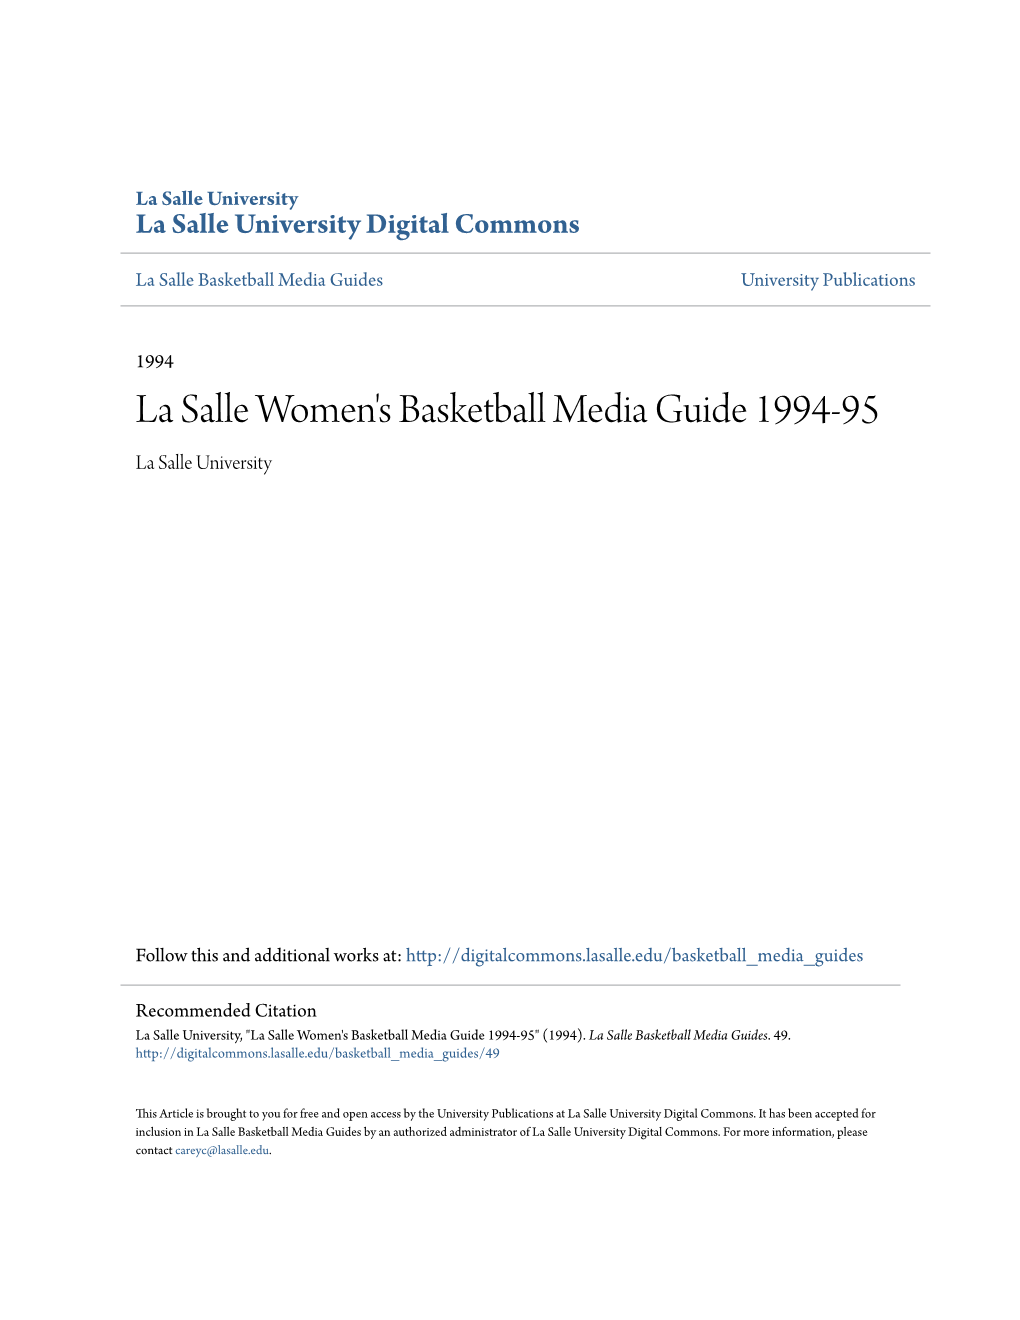 La Salle Women's Basketball Media Guide 1994-95 La Salle University